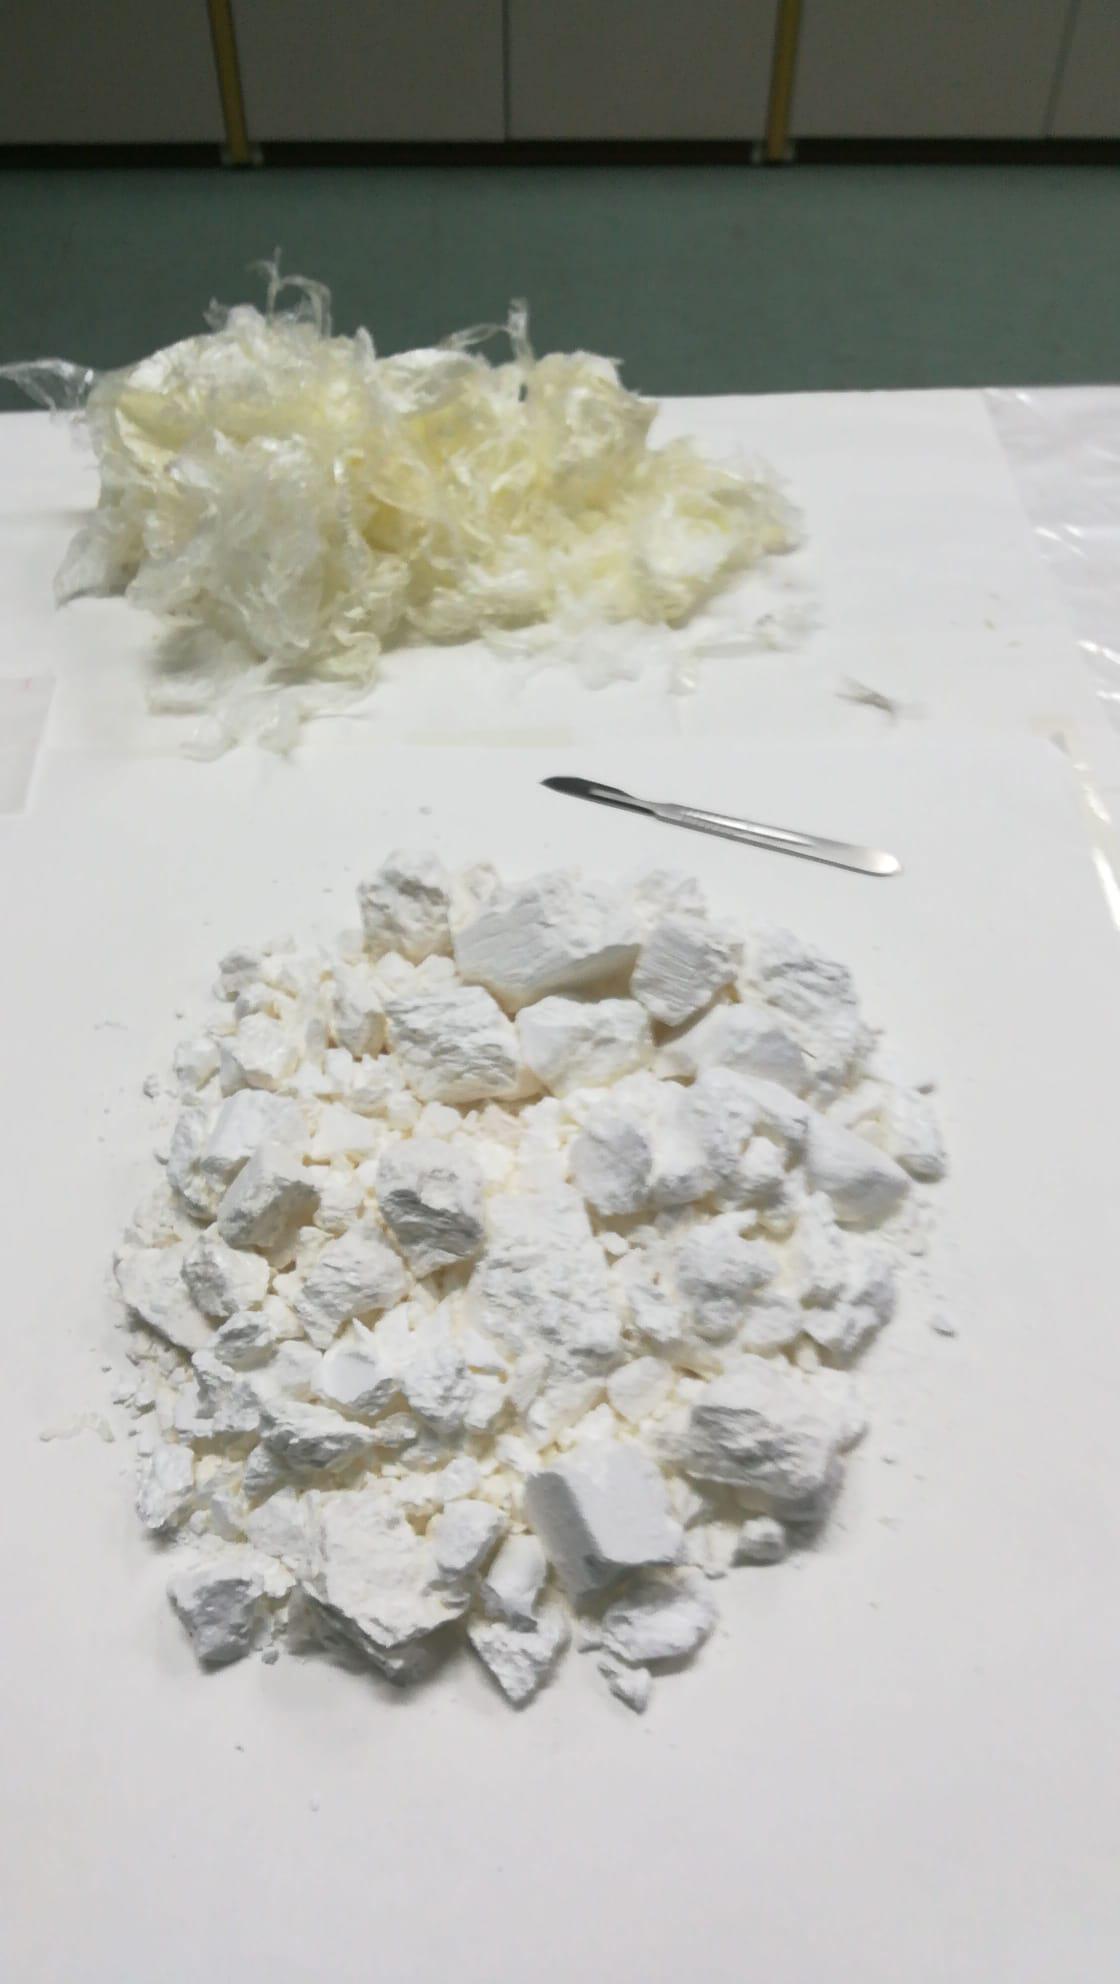 1,5 Kg di cocaina sequestrati dai carabinieri, 47enne in manette